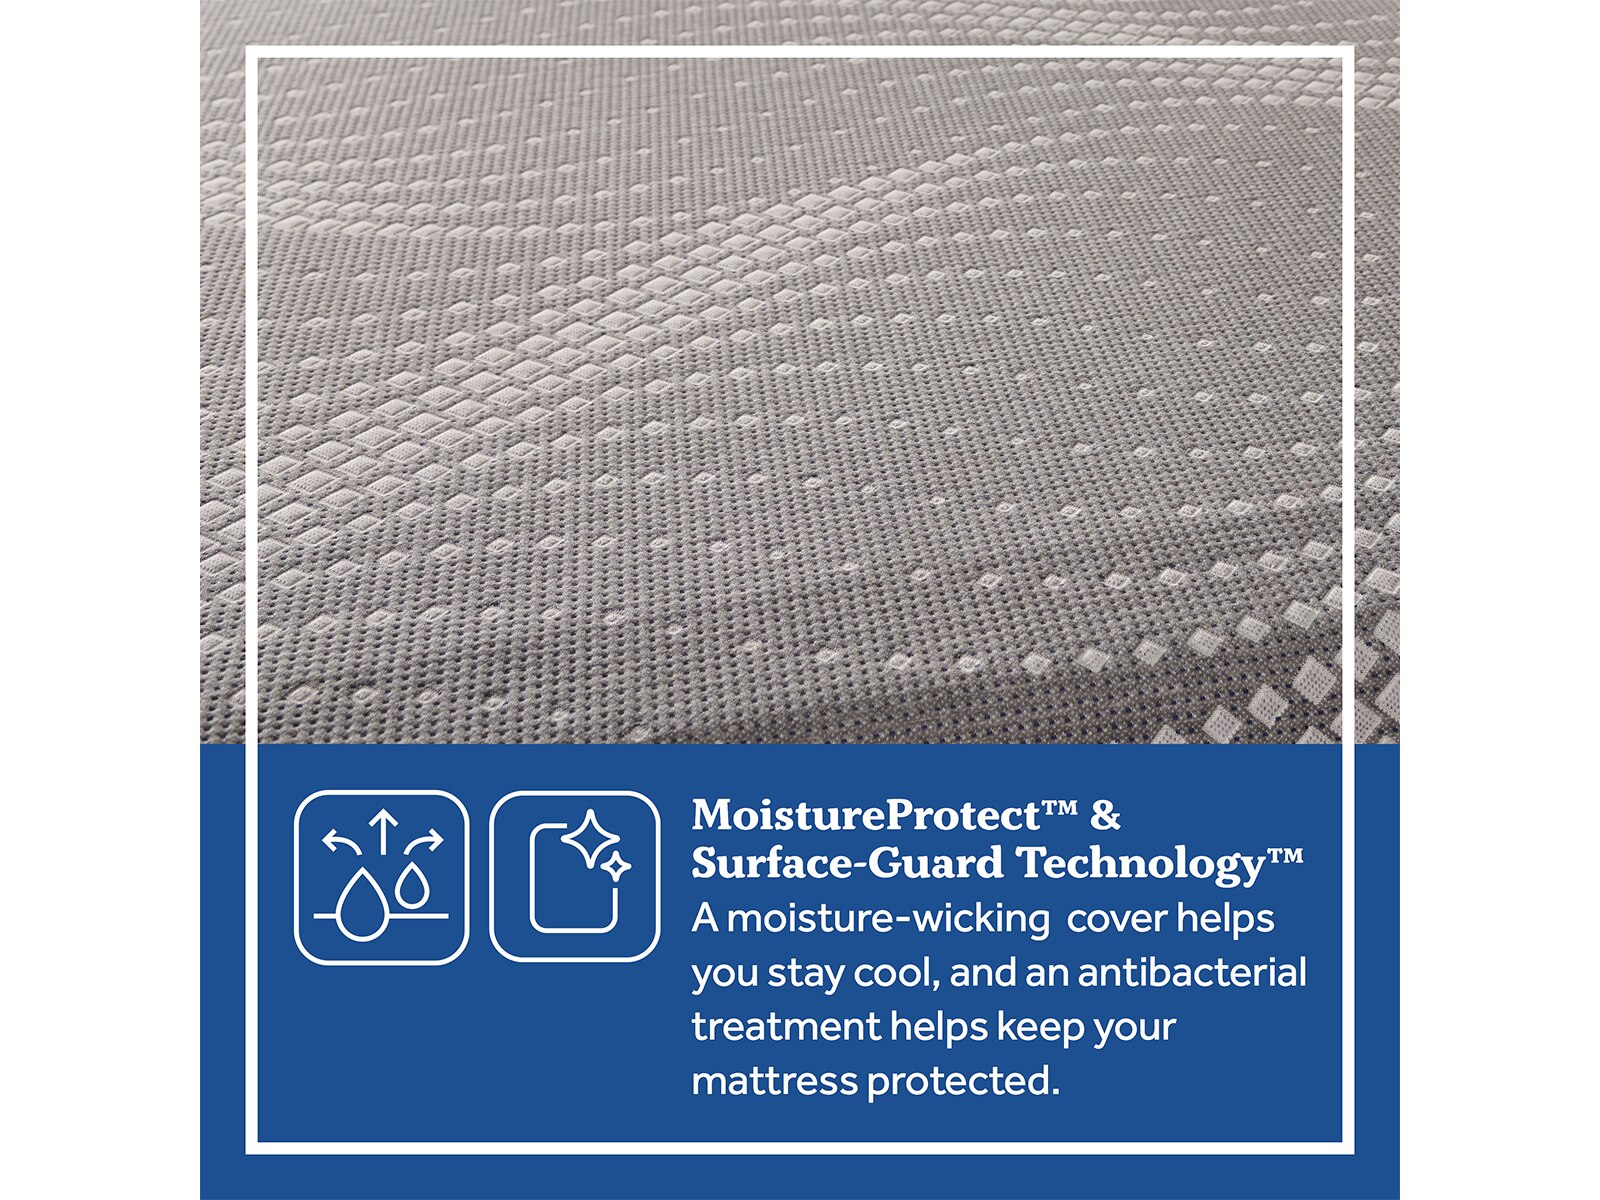 posturepedic hybrid ashurst 11 firm mattress reviews